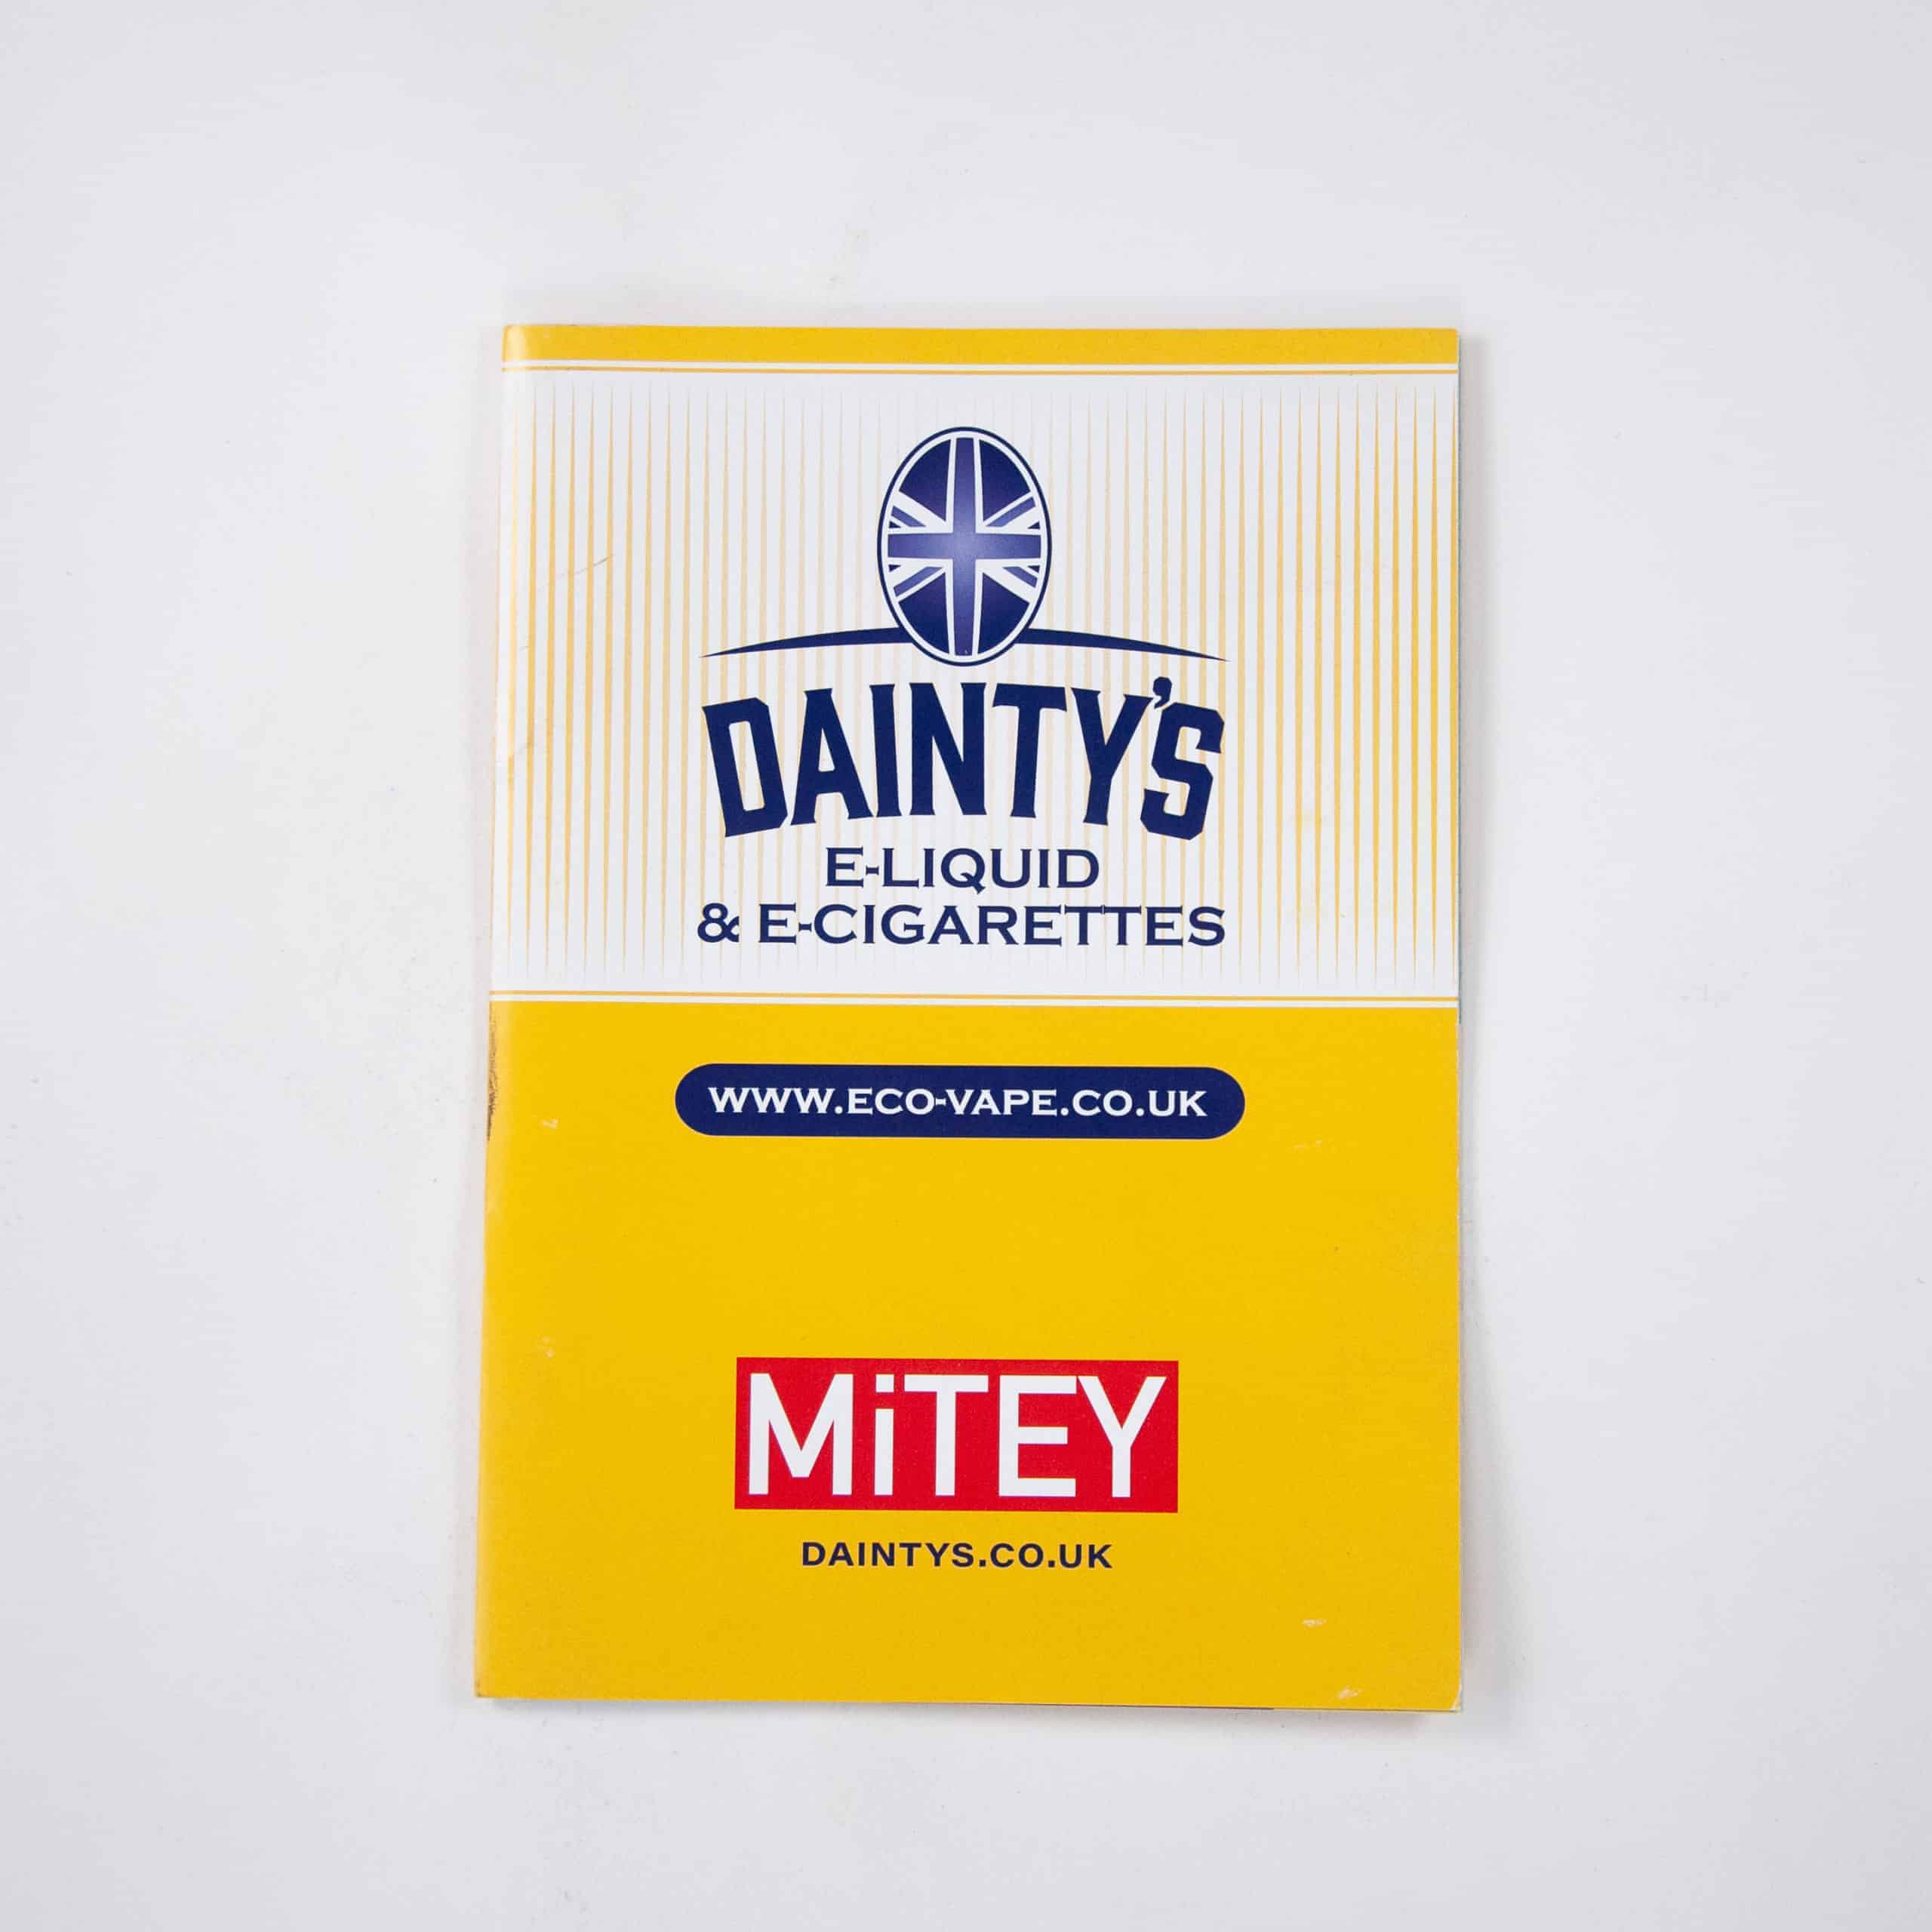 Dainty's brochure